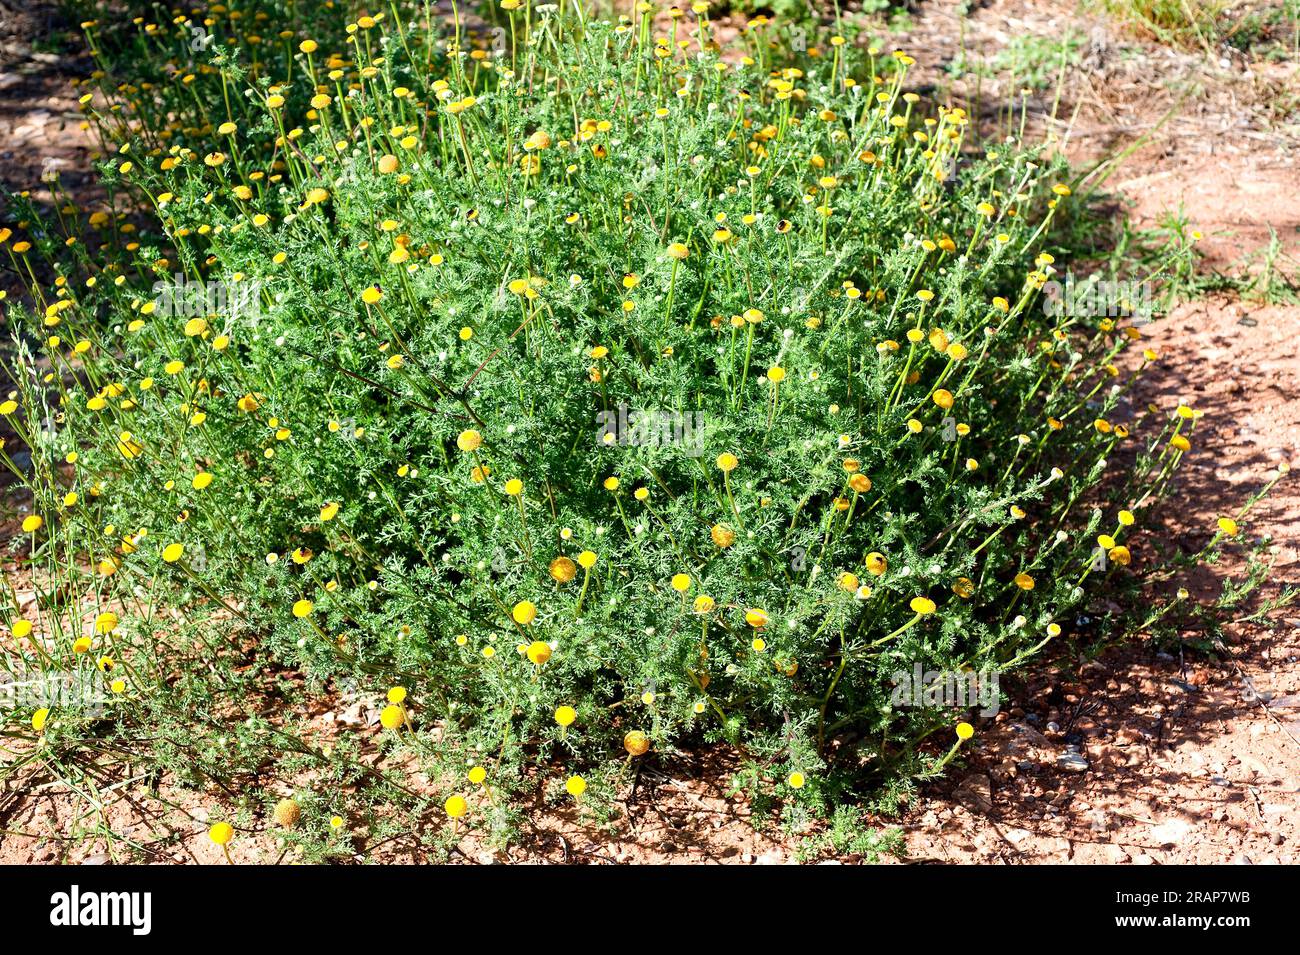 Magarza o manzanilla valenciana (Anacyclus valentinus) is an annual herb native to the western Mediterranean basin. Angiosperms. Eudicots. Asteraceae. Stock Photo